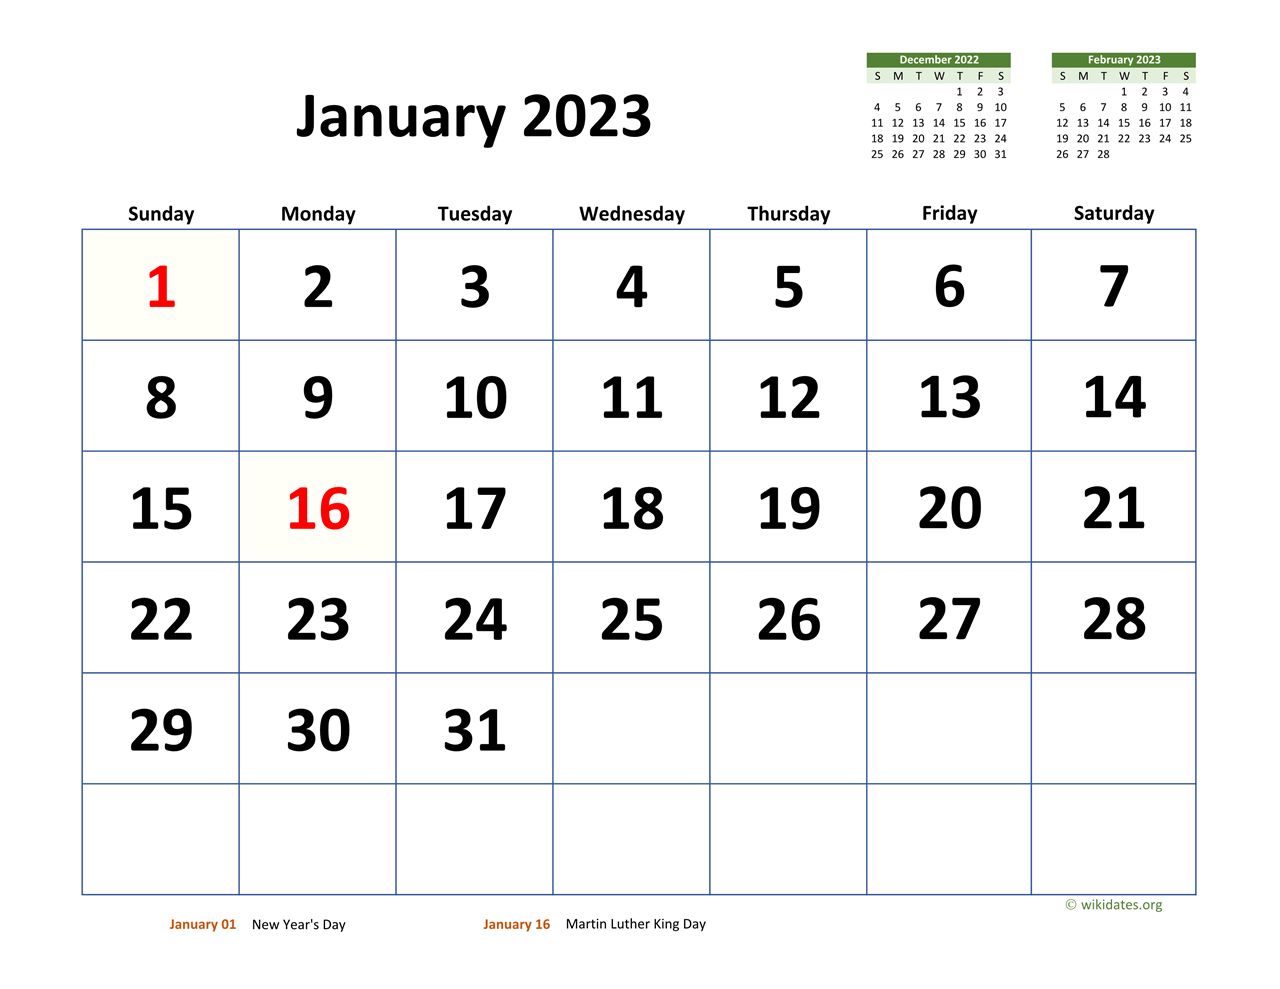 December 2022 January 2023 Calendar Printable January 2023 Calendar With Extra-Large Dates | Wikidates.org